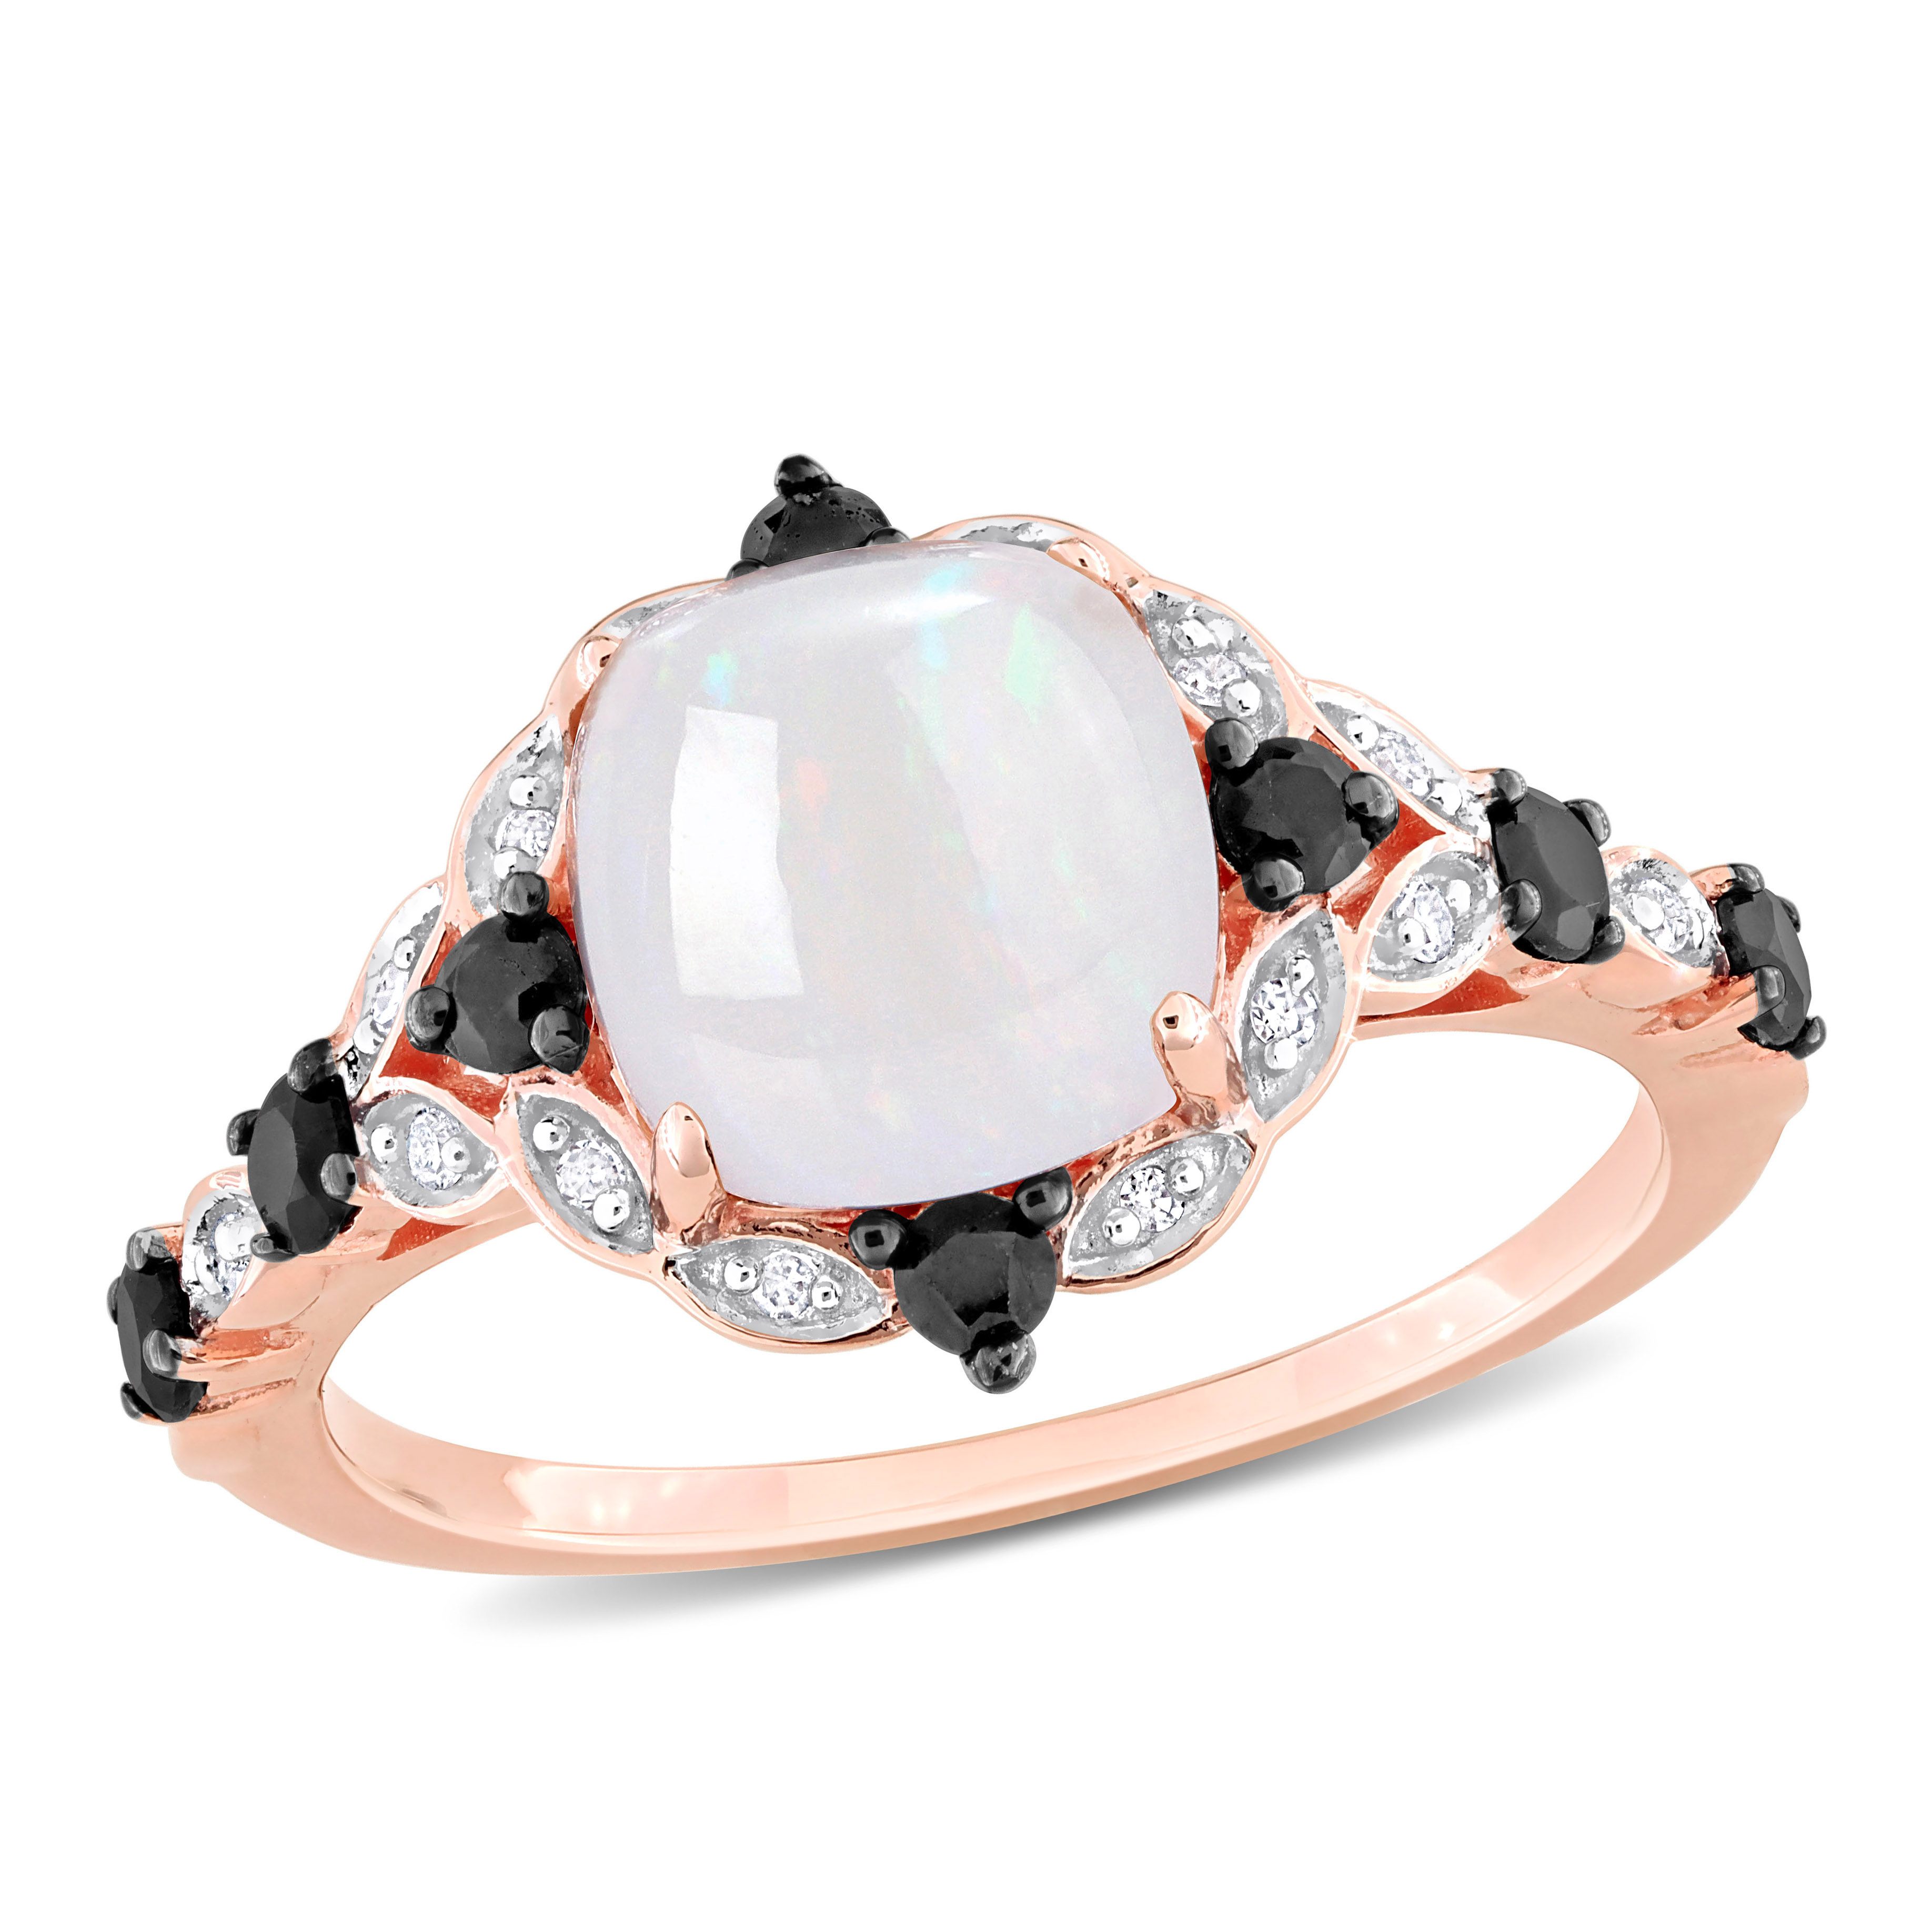 1 4/5 CT TGW Cushion-cut Opal Black Sapphire & Diamond Accent Cocktail Ring in 10k Rose Gold